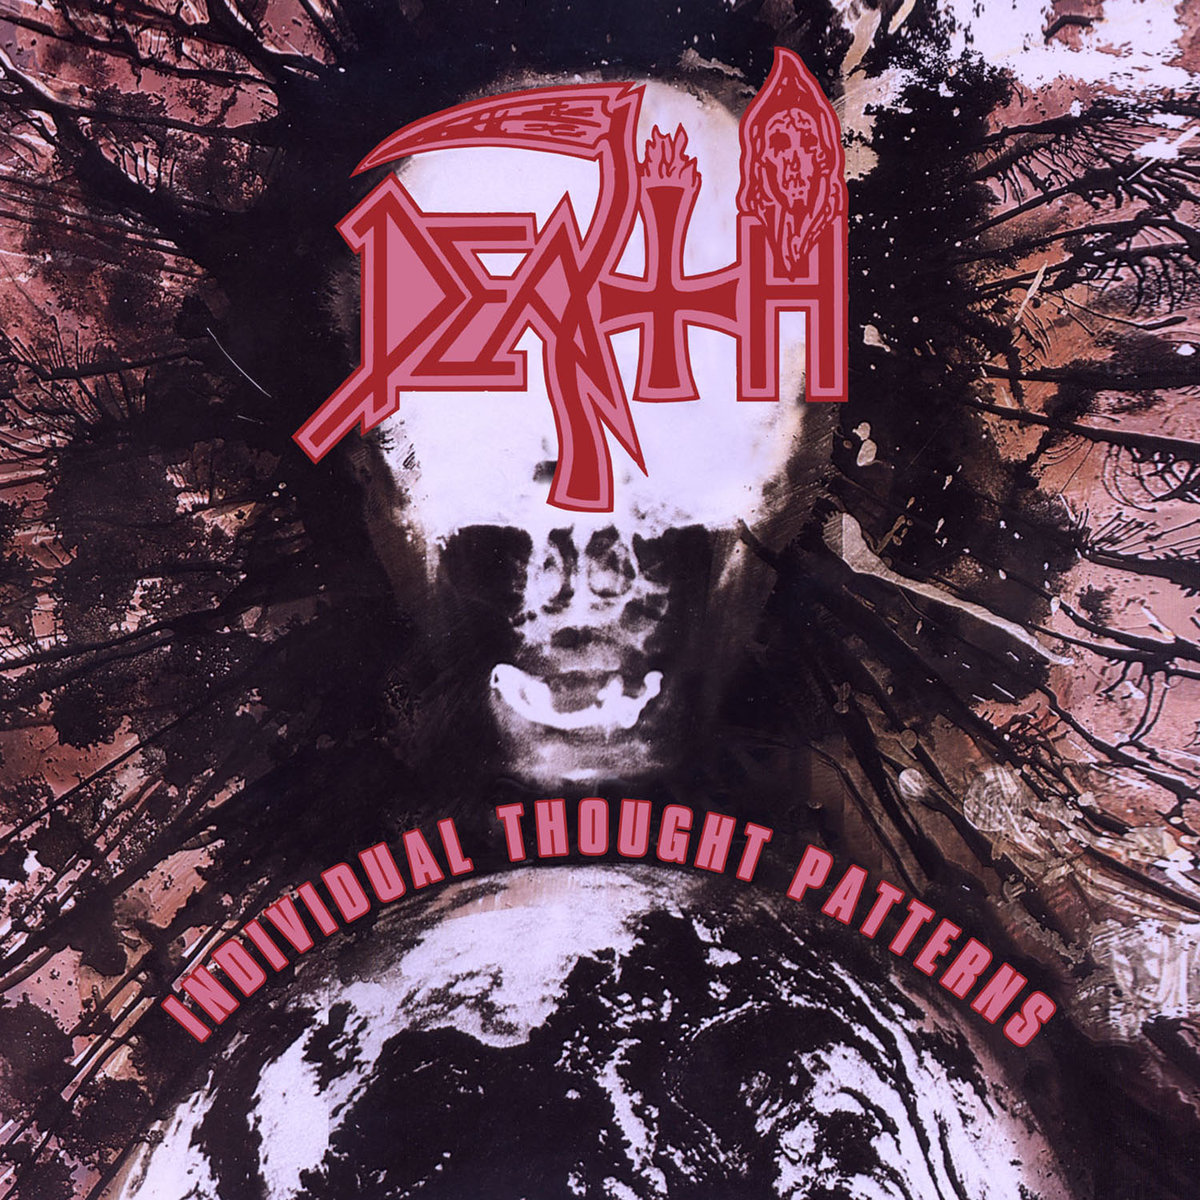 Death - Individual Thought Patterns - VINYL LP